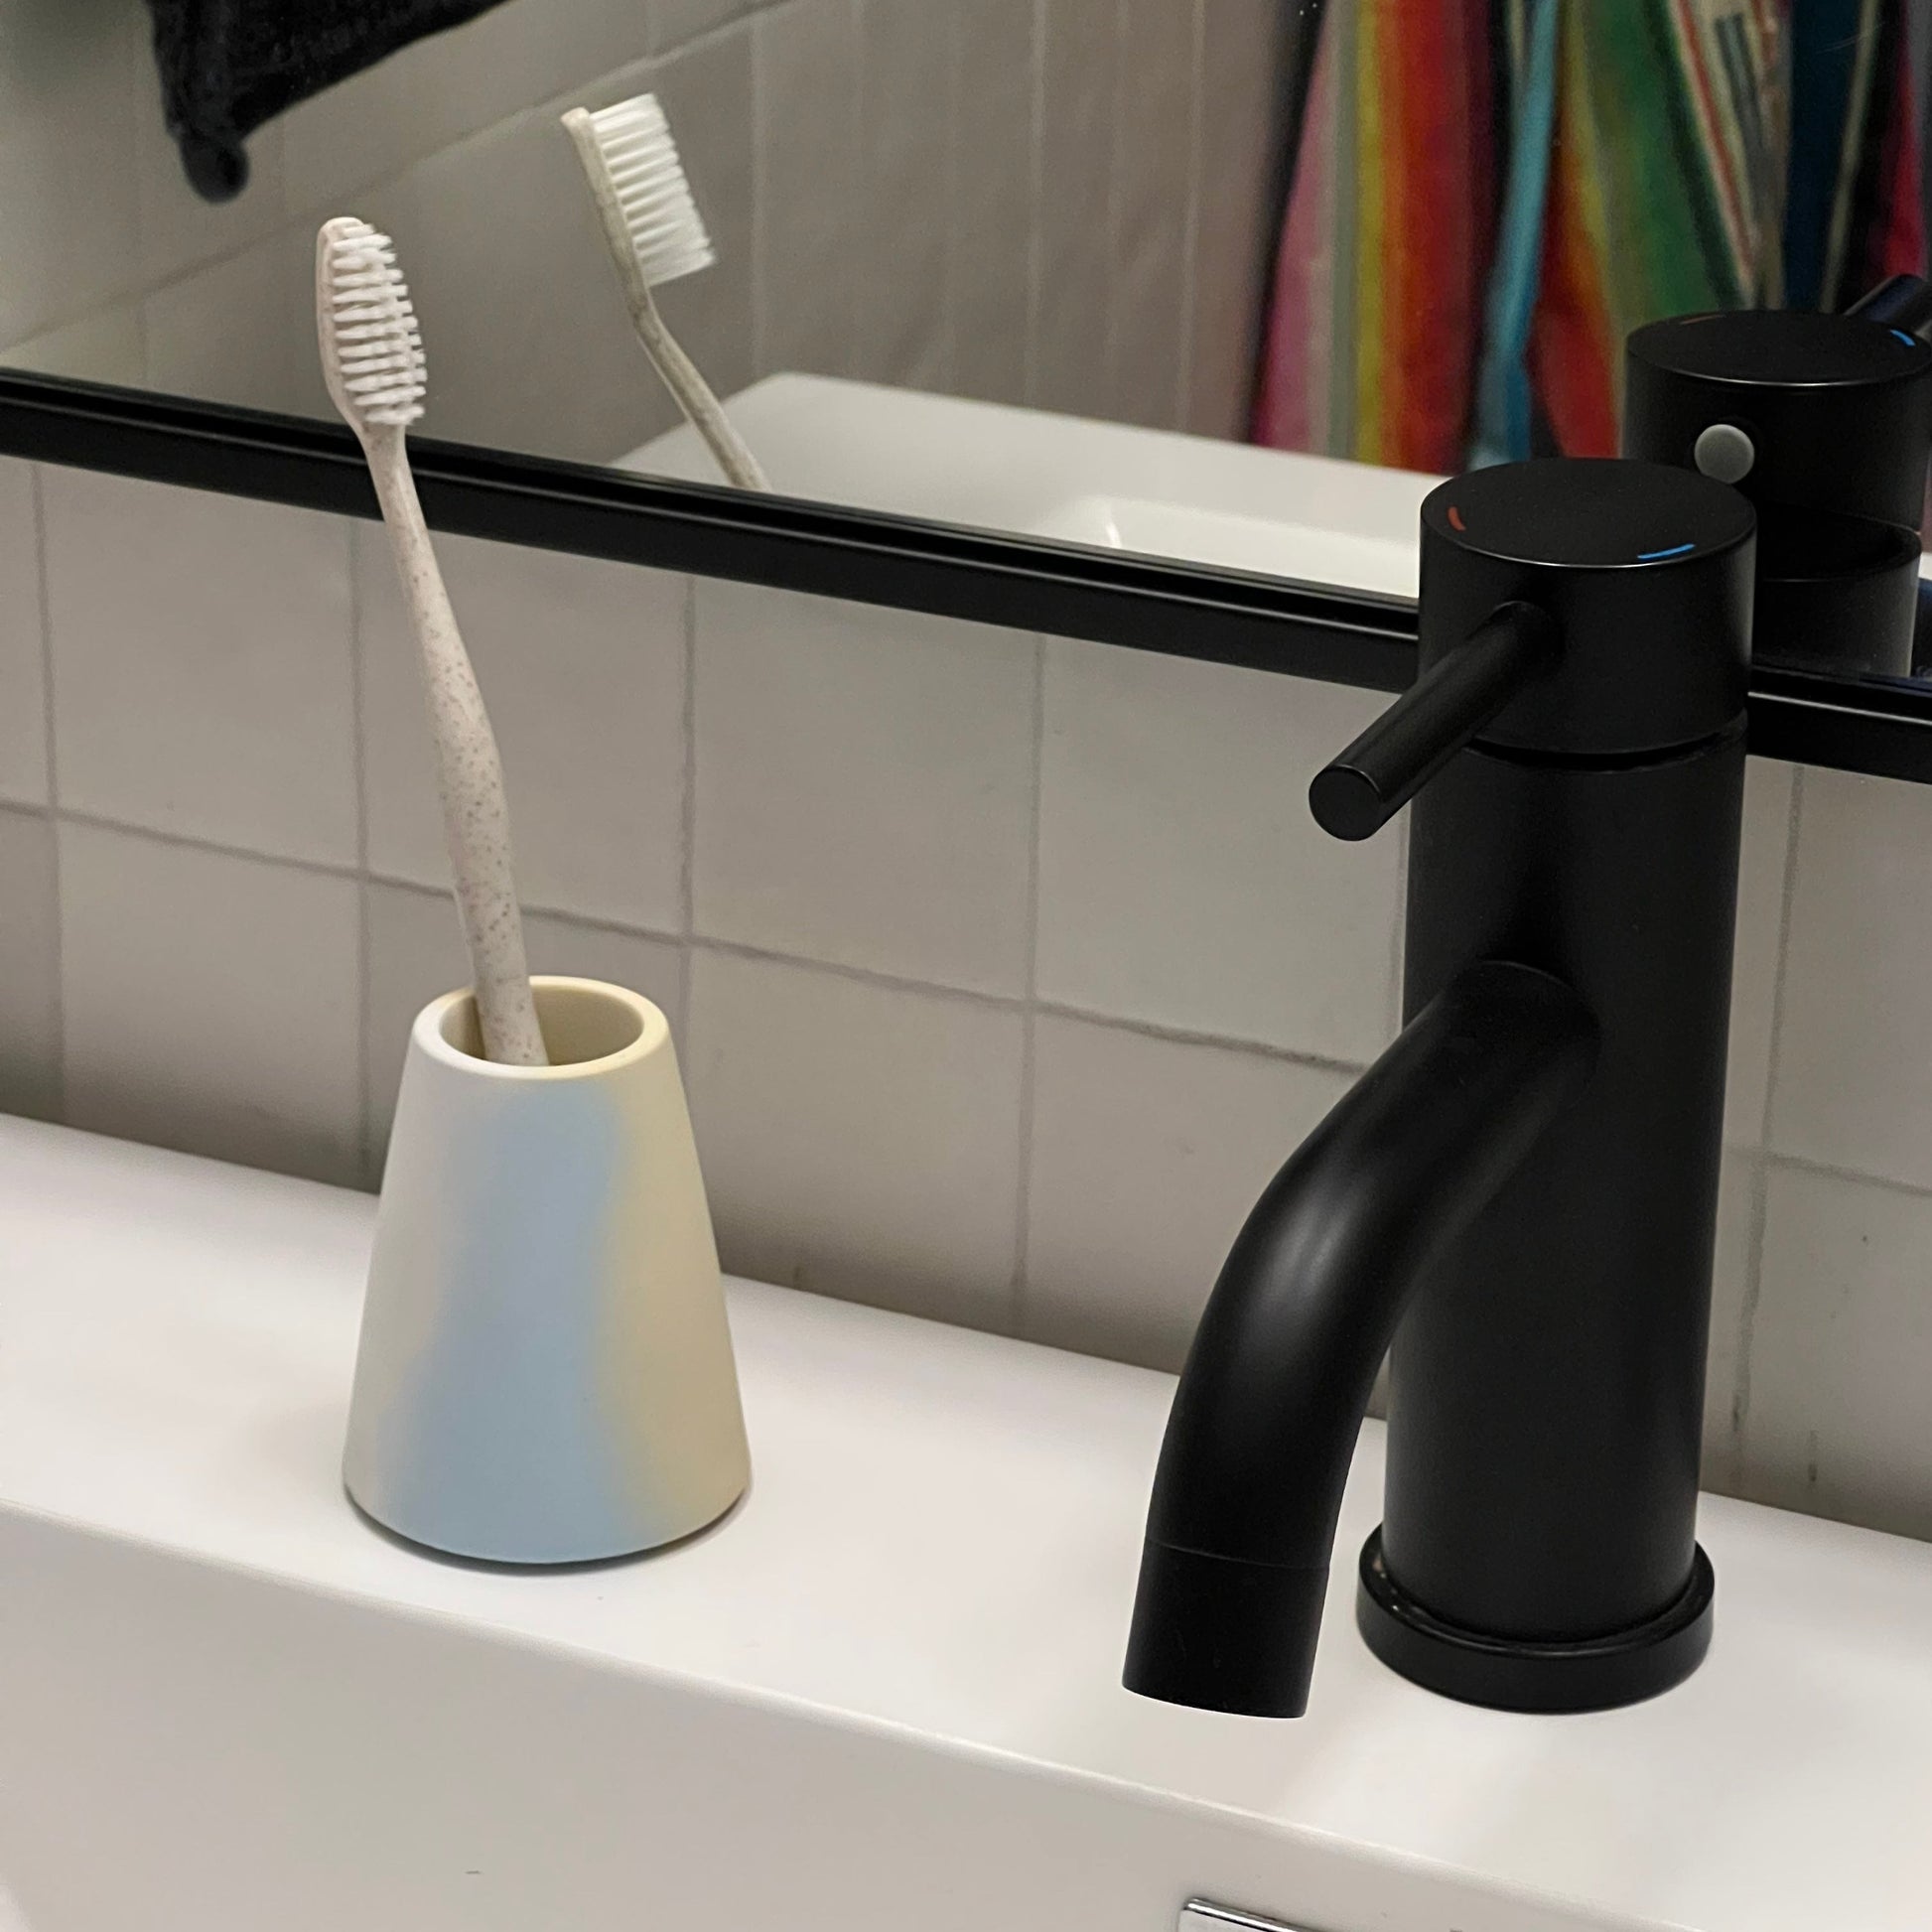 Toothbrush Holder in Jawbreaker Terrazzo, styled by a sink.